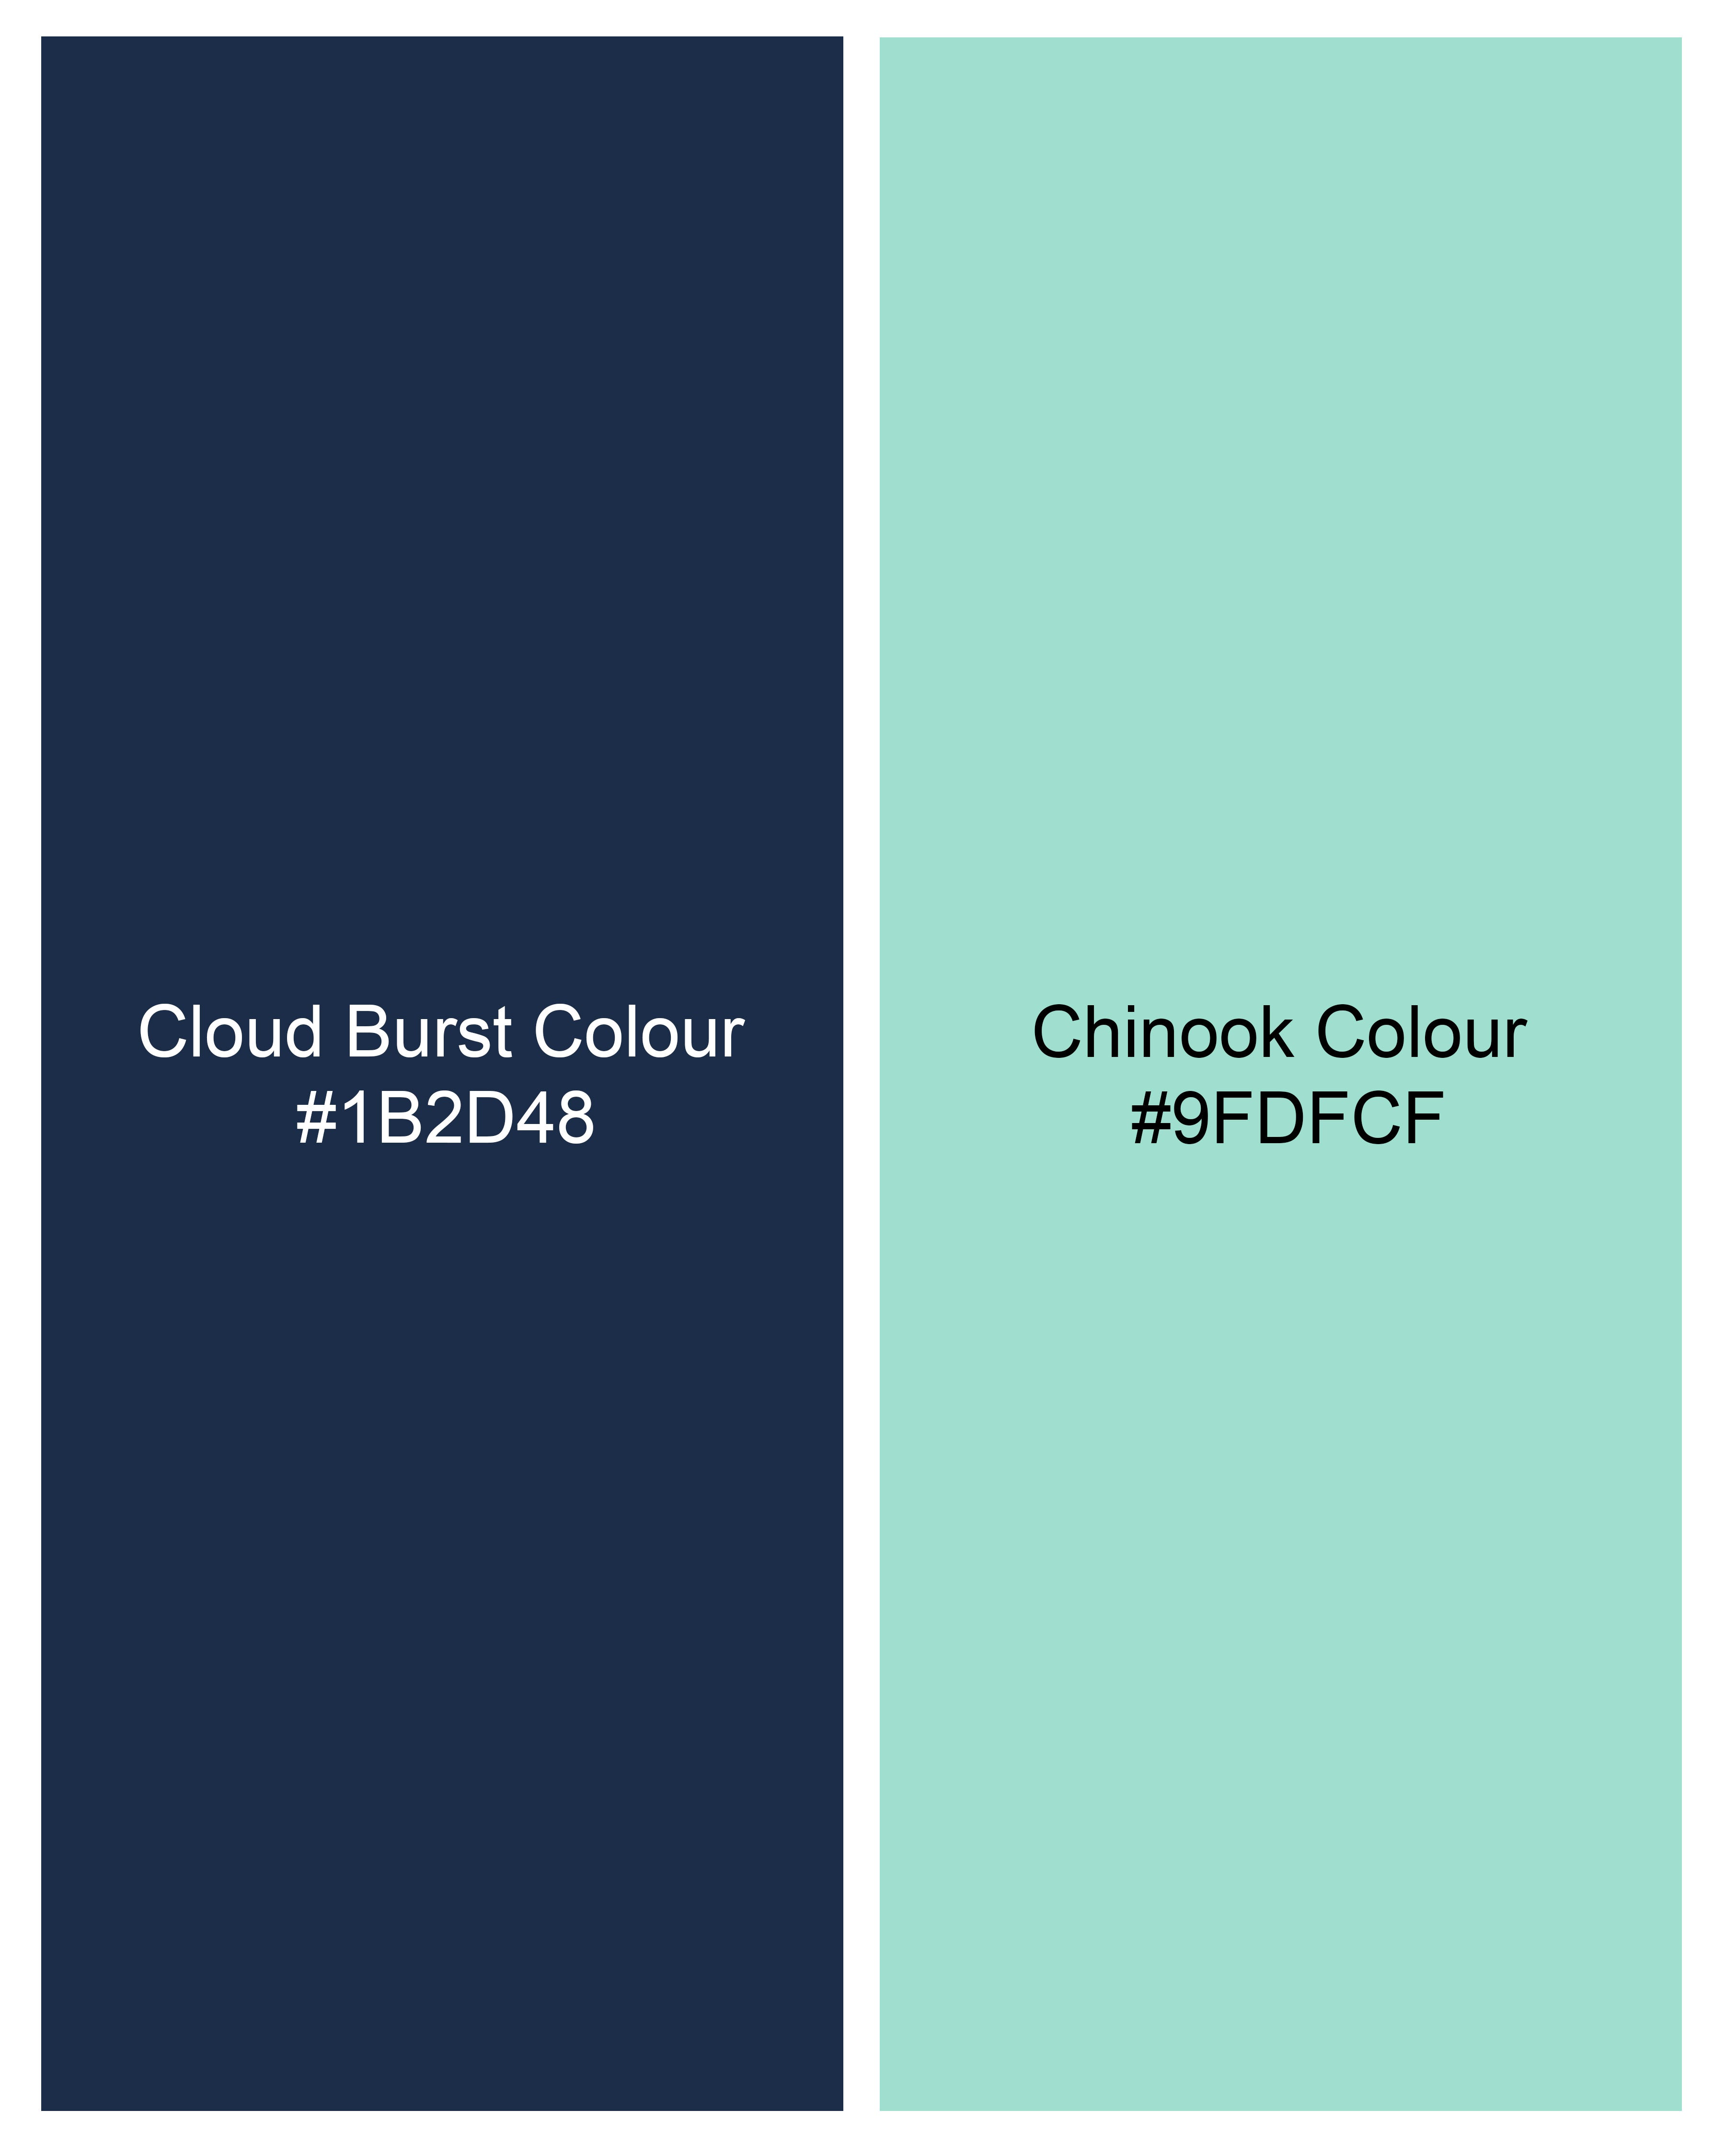 Cloud Burst Blue with Chinook Green Super Soft Premium Cotton Designer Shirt 9935-GR-P486-38, 9935-GR-P486-H-38, 9935-GR-P486-39, 9935-GR-P486-H-39, 9935-GR-P486-40, 9935-GR-P486-H-40, 9935-GR-P486-42, 9935-GR-P486-H-42, 9935-GR-P486-44, 9935-GR-P486-H-44, 9935-GR-P486-46, 9935-GR-P486-H-46, 9935-GR-P486-48, 9935-GR-P486-H-48, 9935-GR-P486-50, 9935-GR-P486-H-50, 9935-GR-P486-52, 9935-GR-P486-H-52